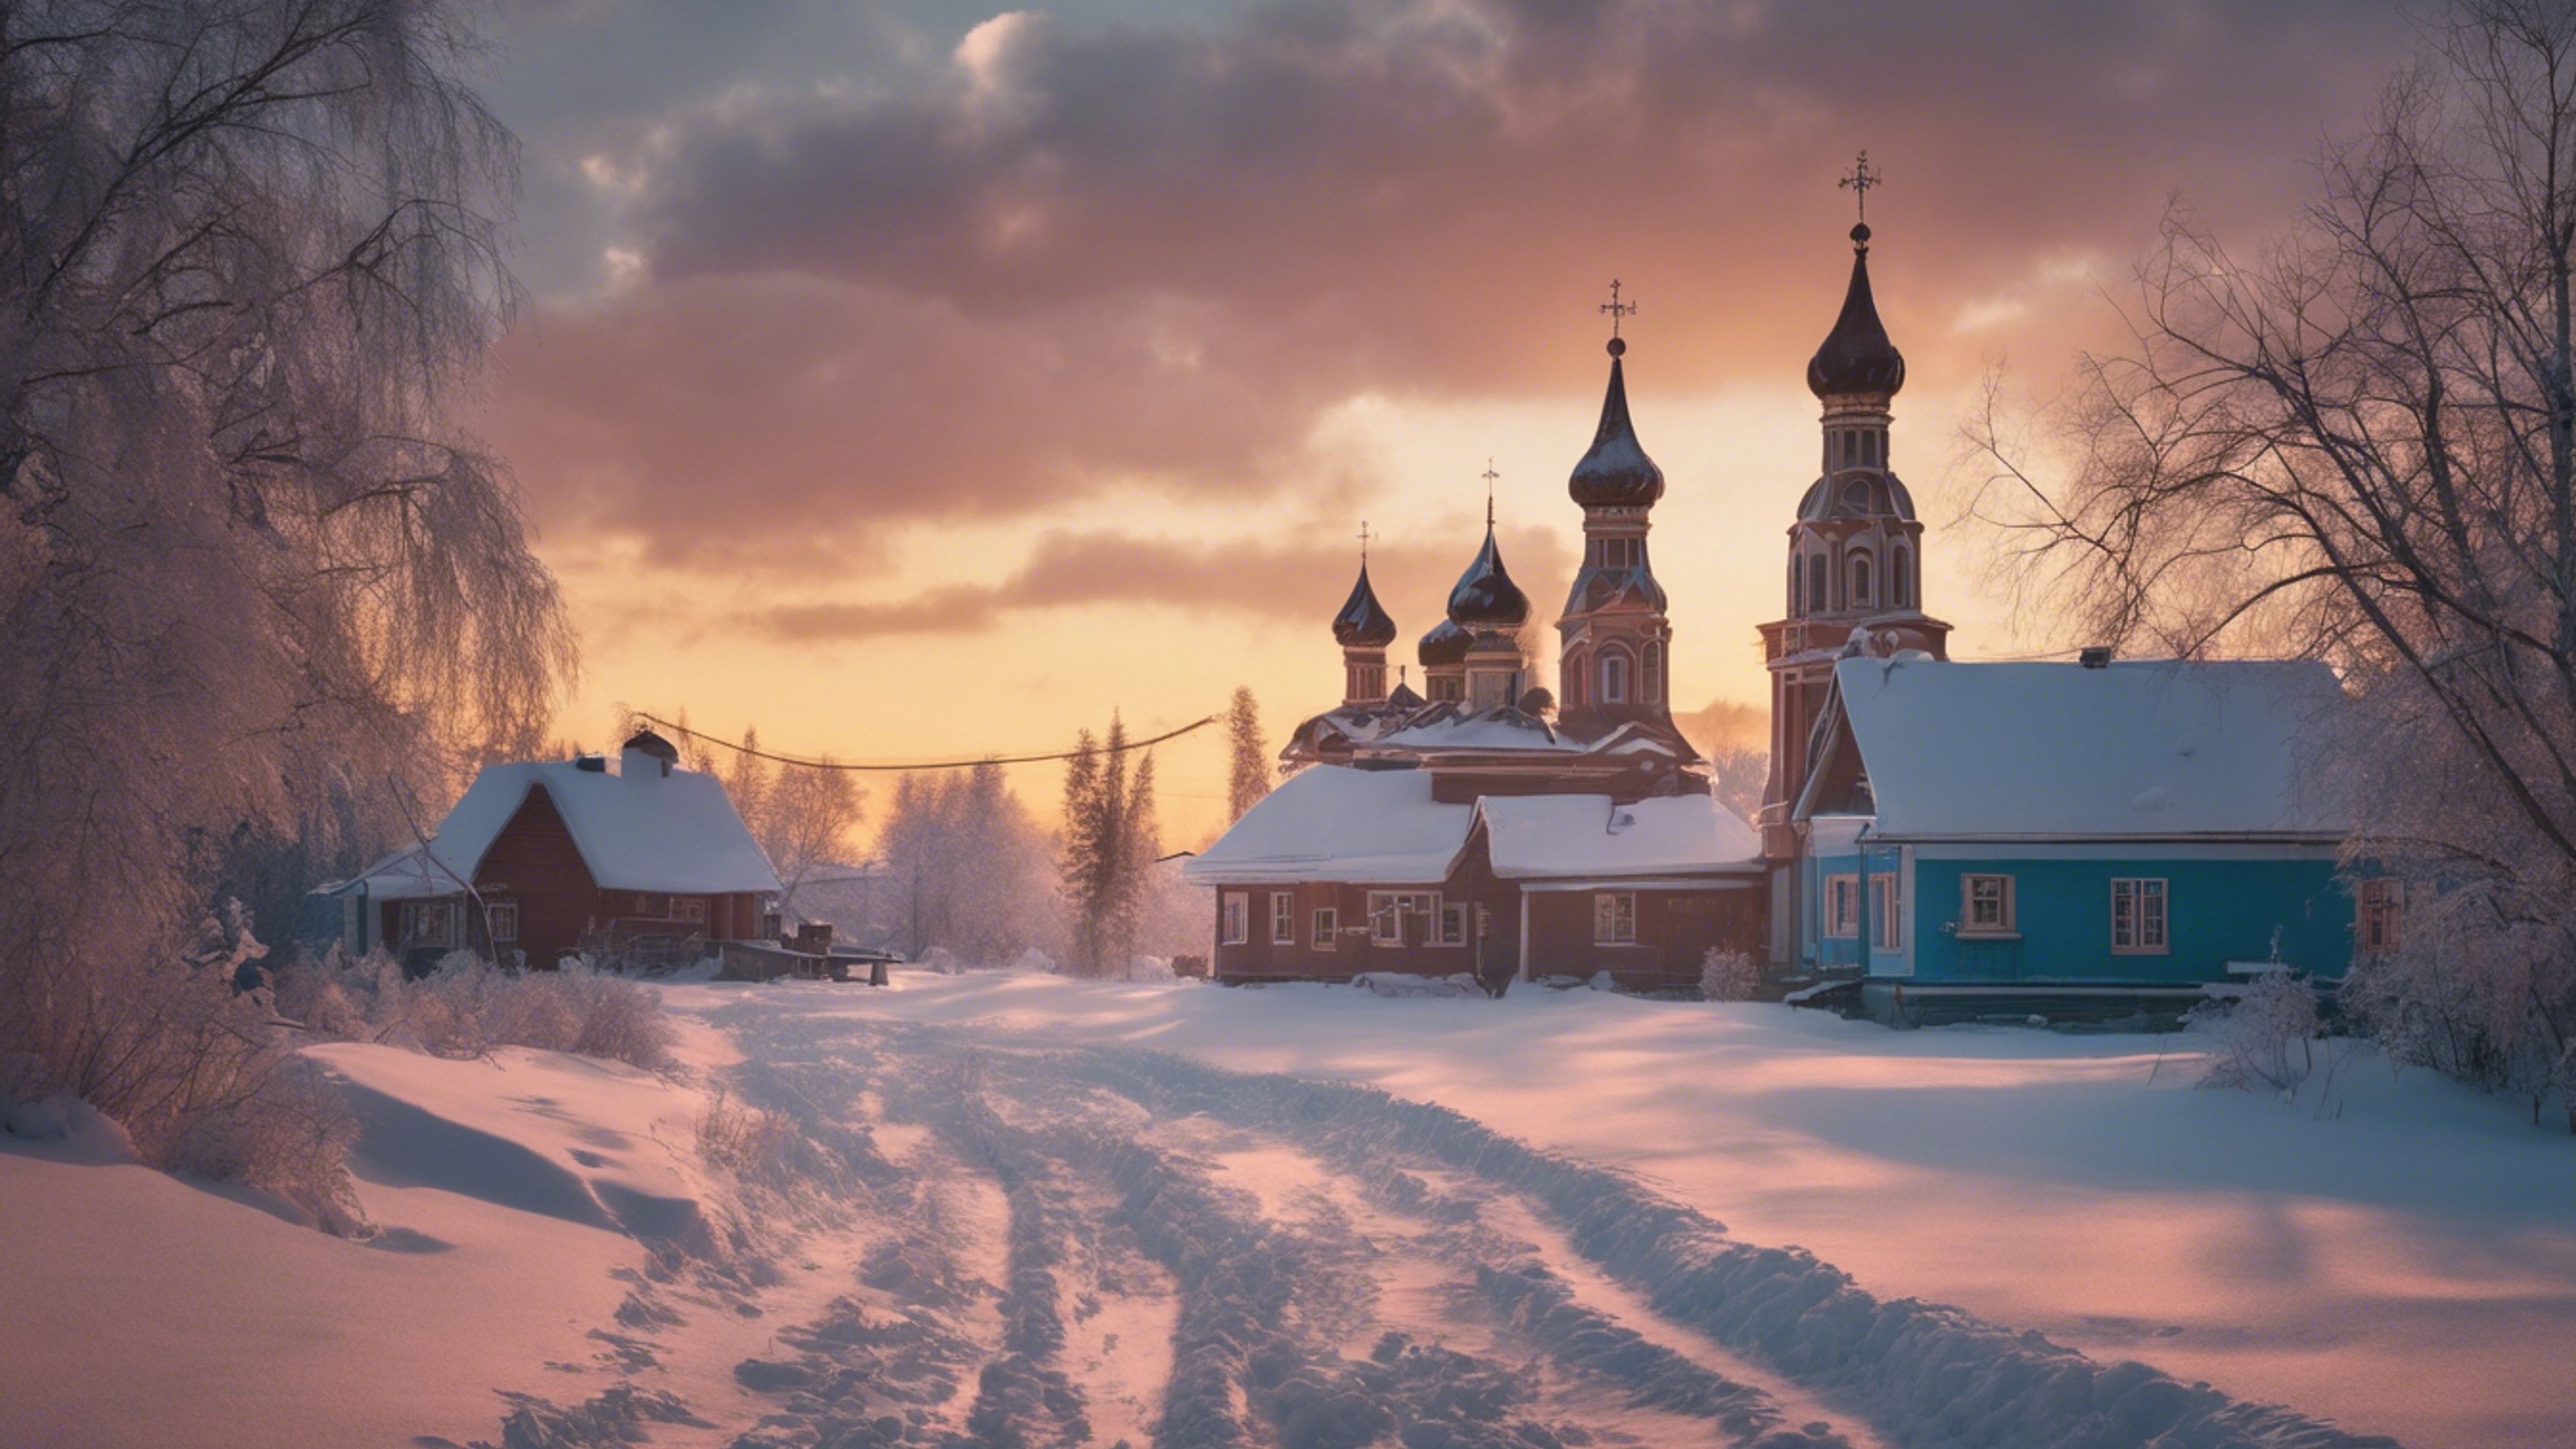 A snowbound Russian village under the mystic light of a nostalgic sunset. Tapet[d590942729fa40abb5f5]